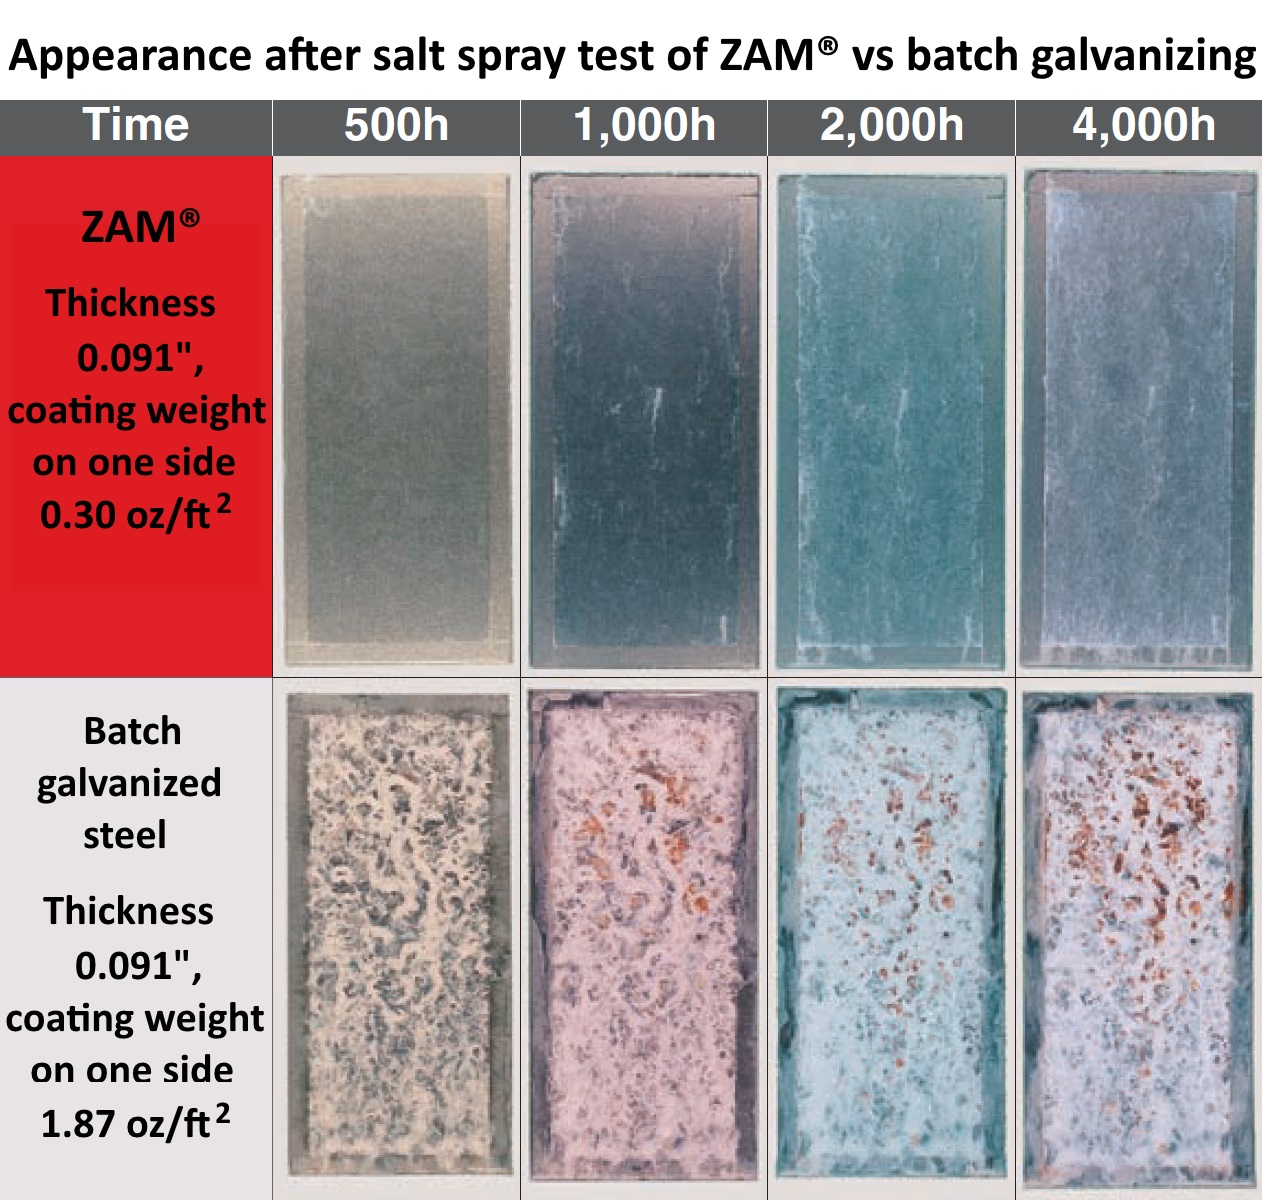 Comparison photos showing superior corrosion of ZAM vs batch galvanizing after salt spray test